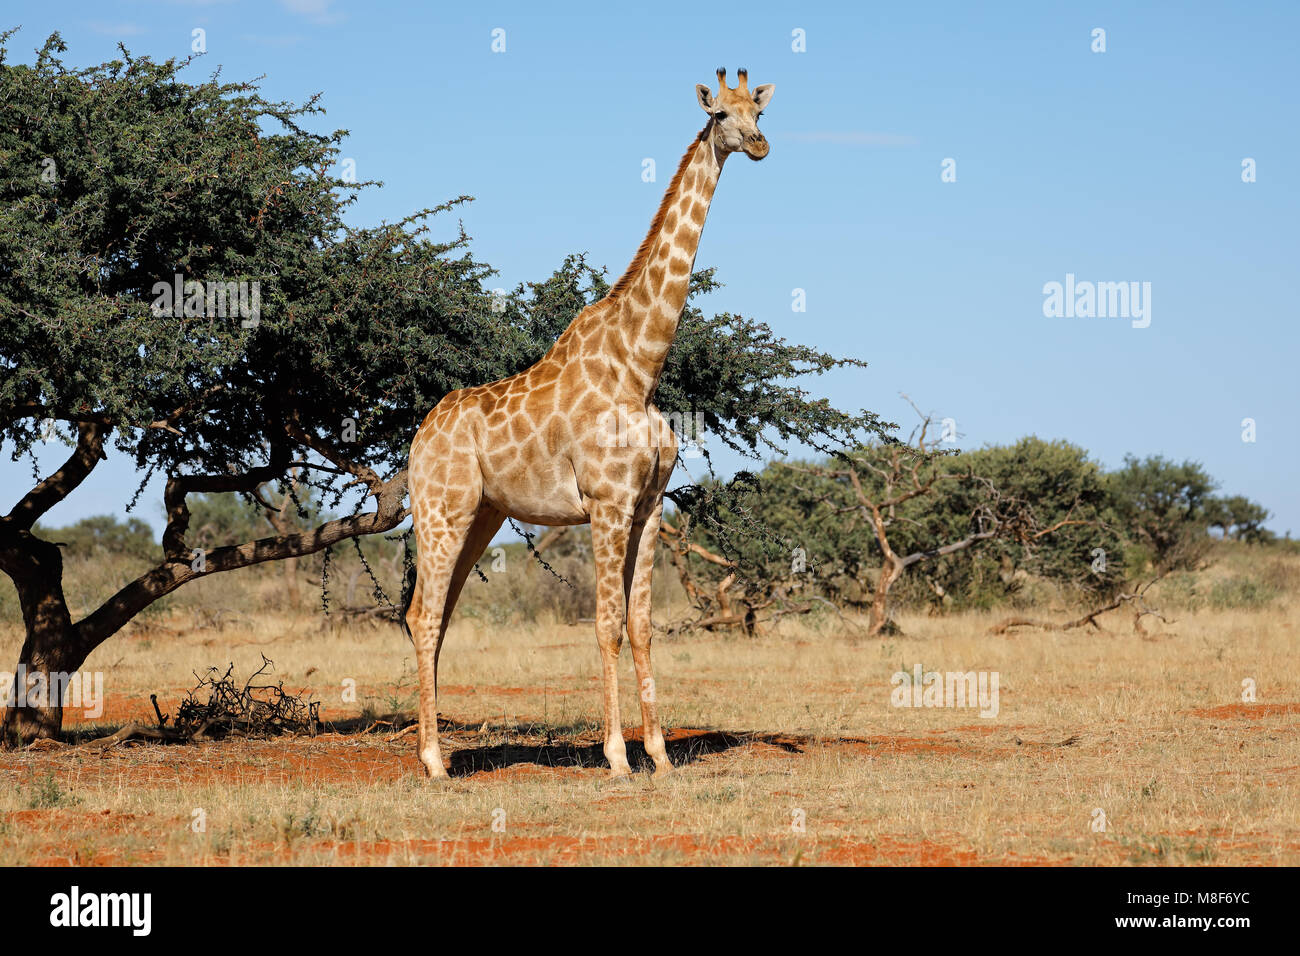 Le sud de la Girafe (Giraffa camelopardalis) dans l'habitat naturel, l'Afrique du Sud Banque D'Images